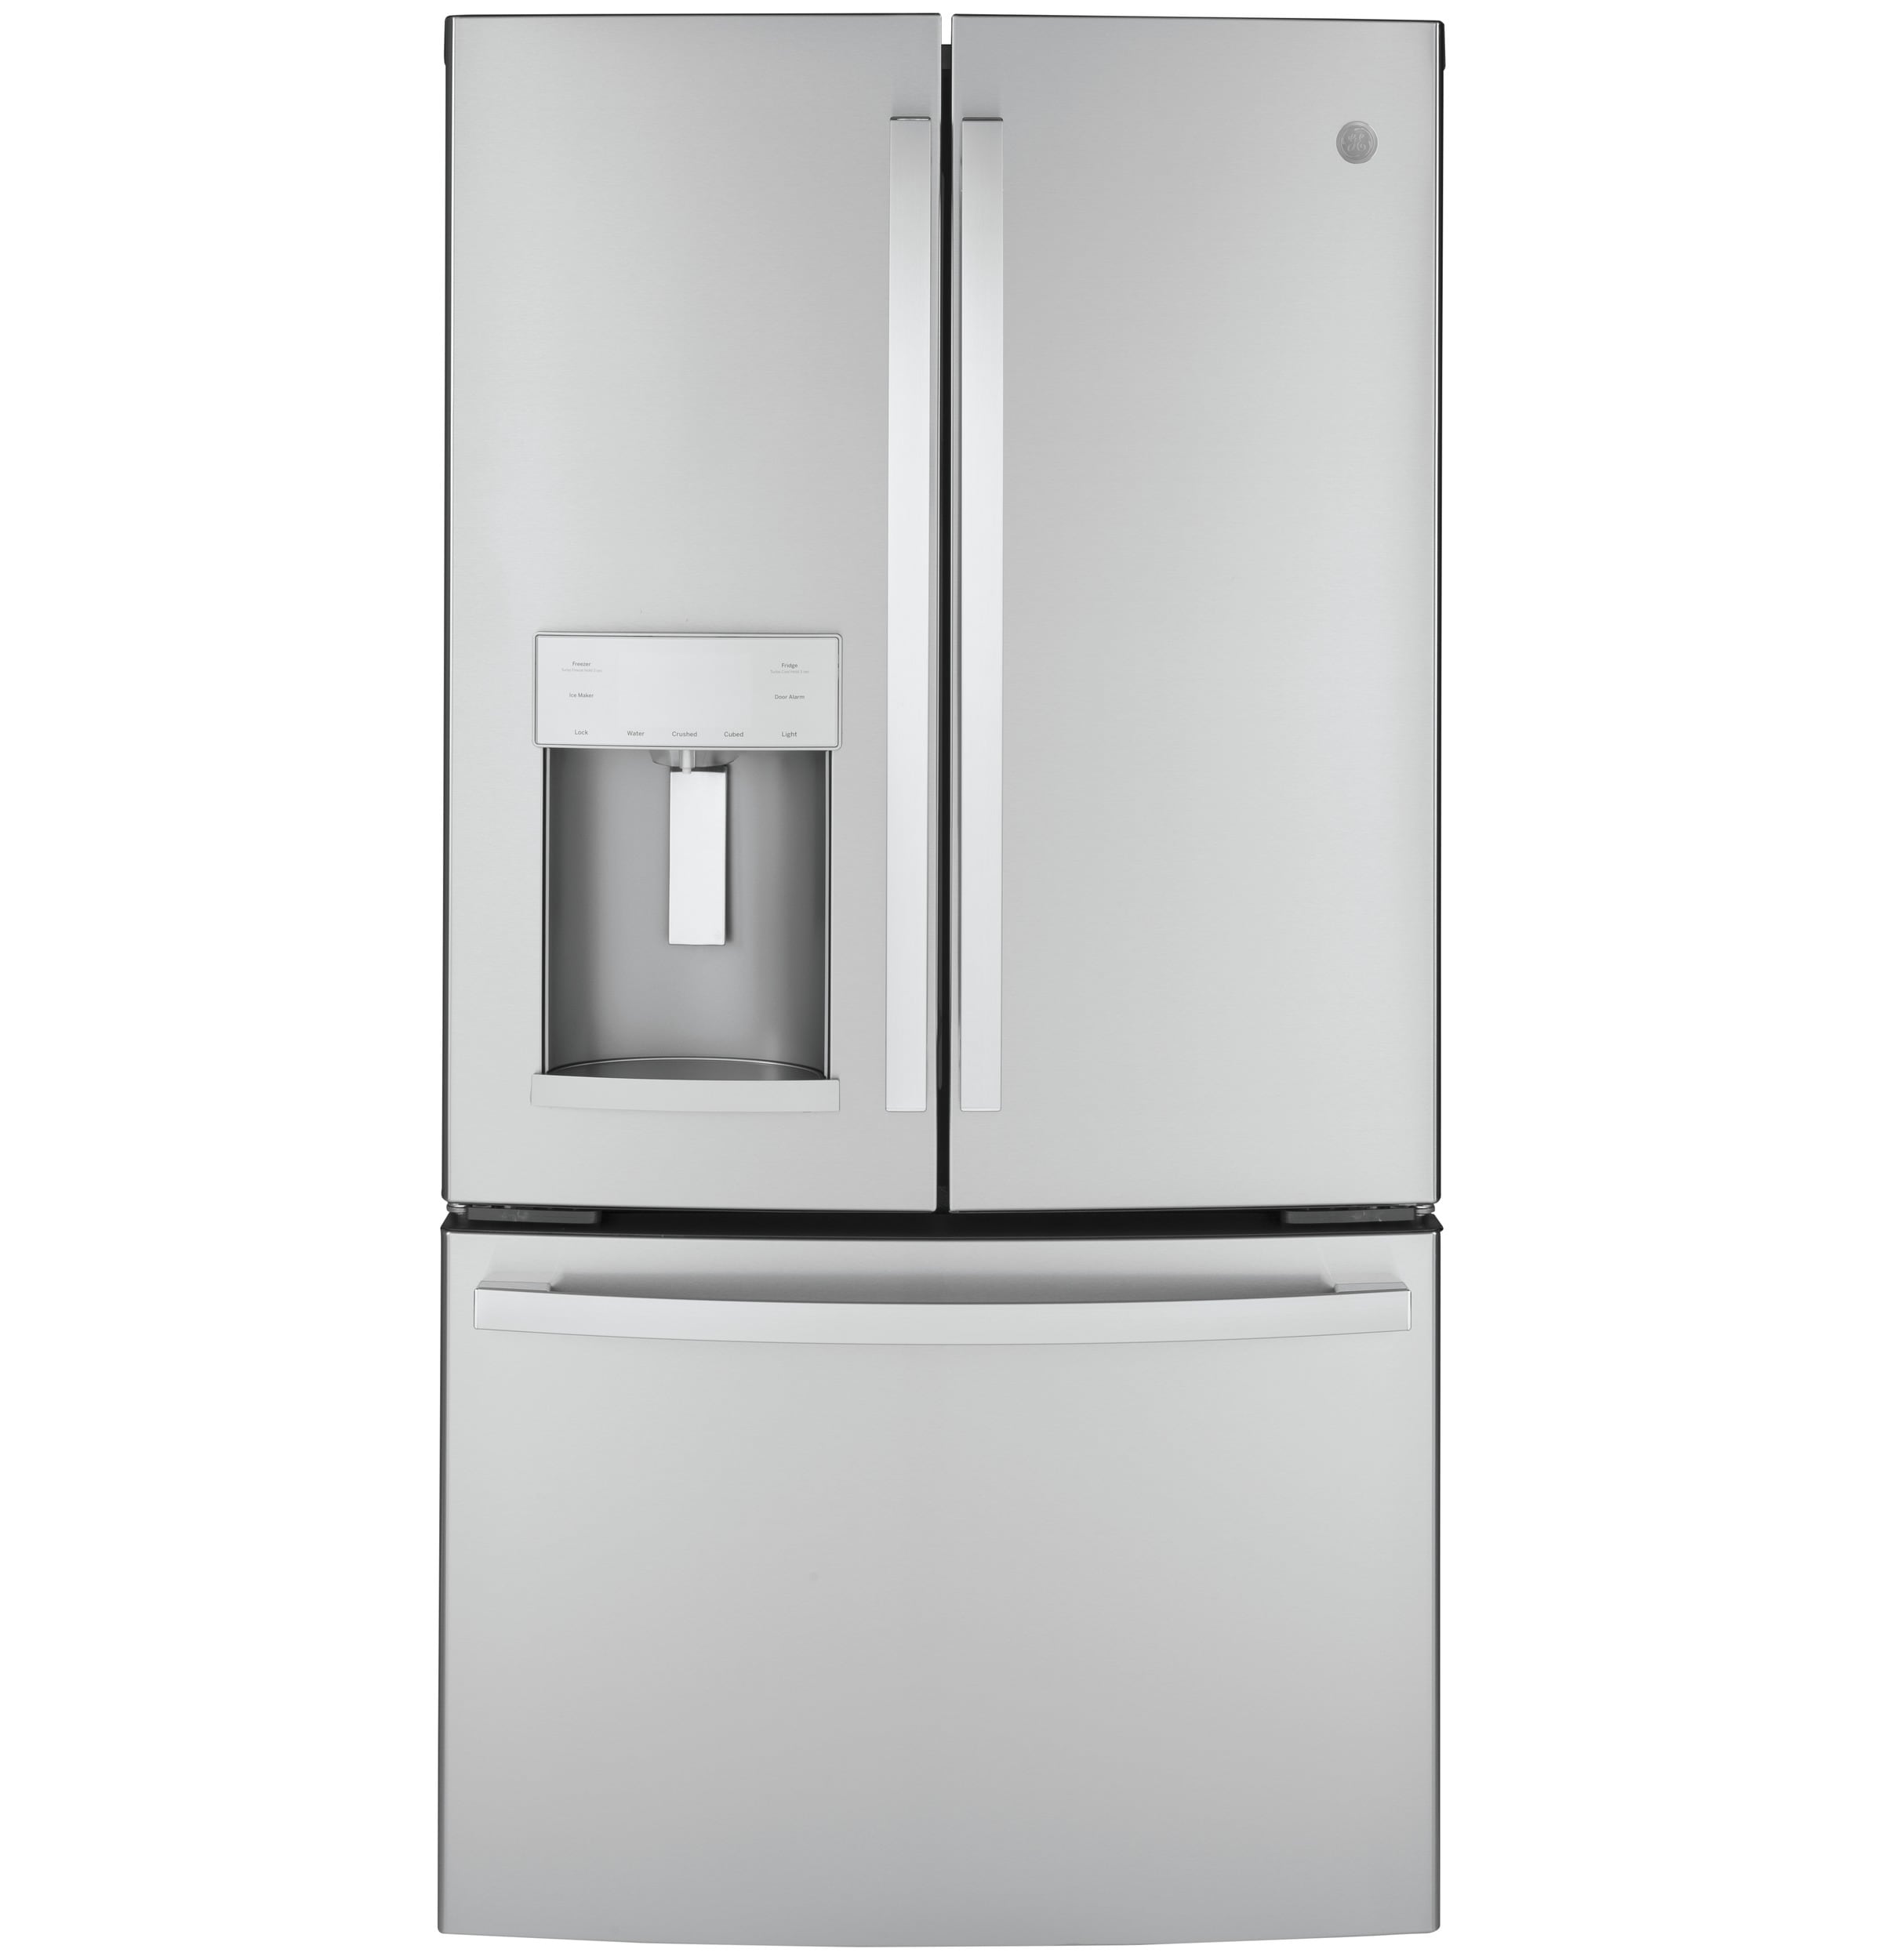 How To Fix The Error Code F3 For GE Refrigerator & Freezer